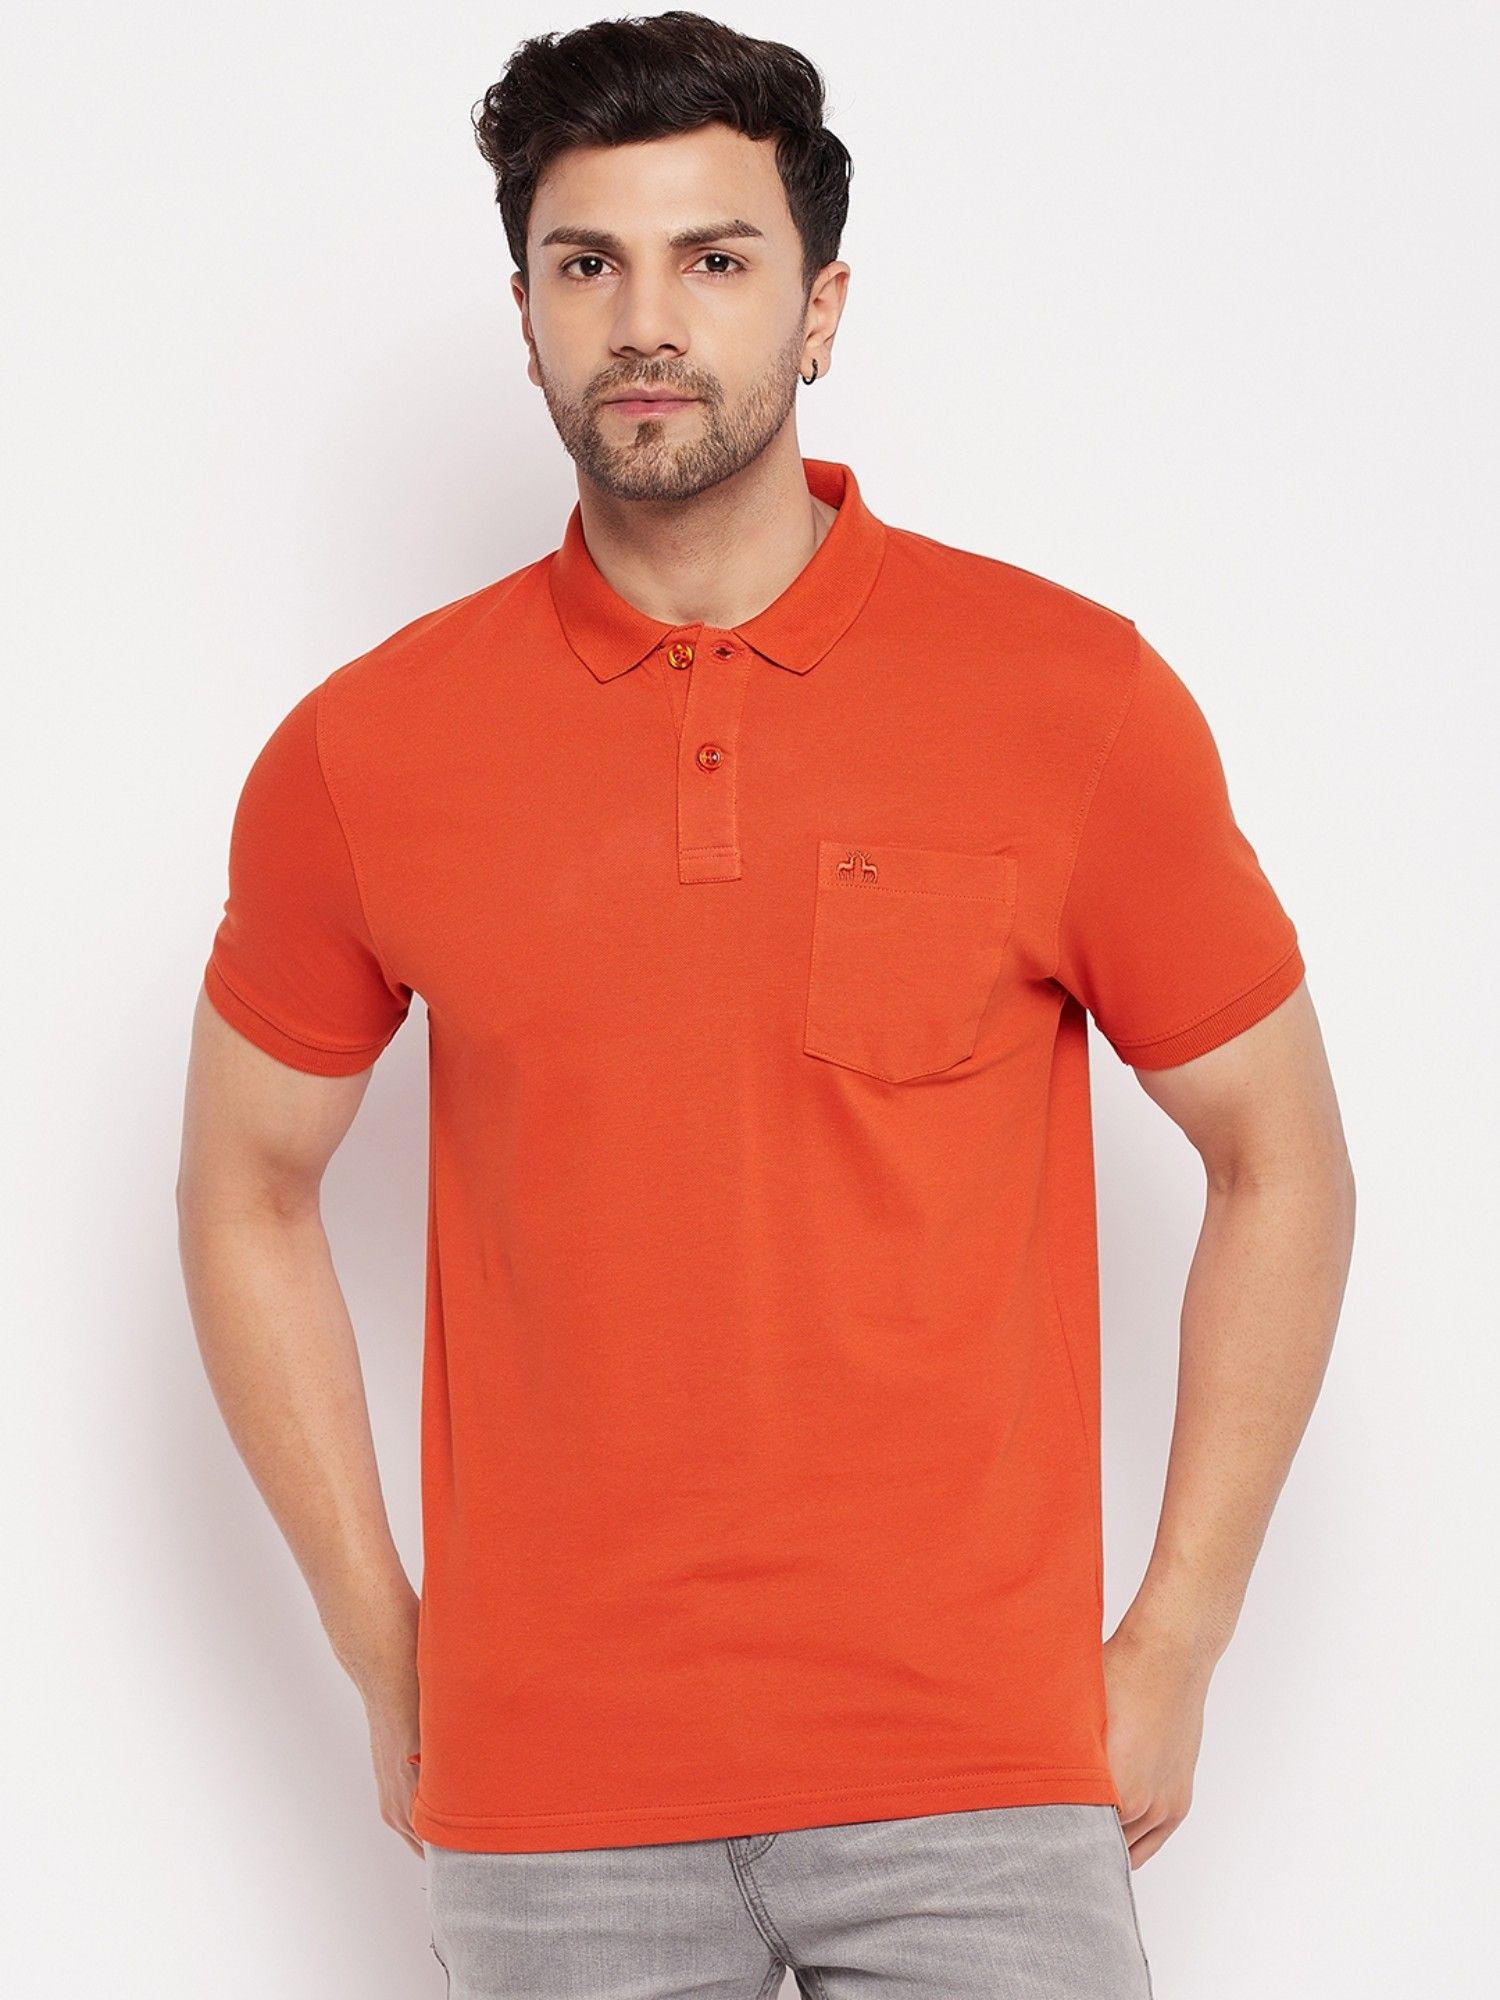 mens cotton lycra orange polo neck t-shirt